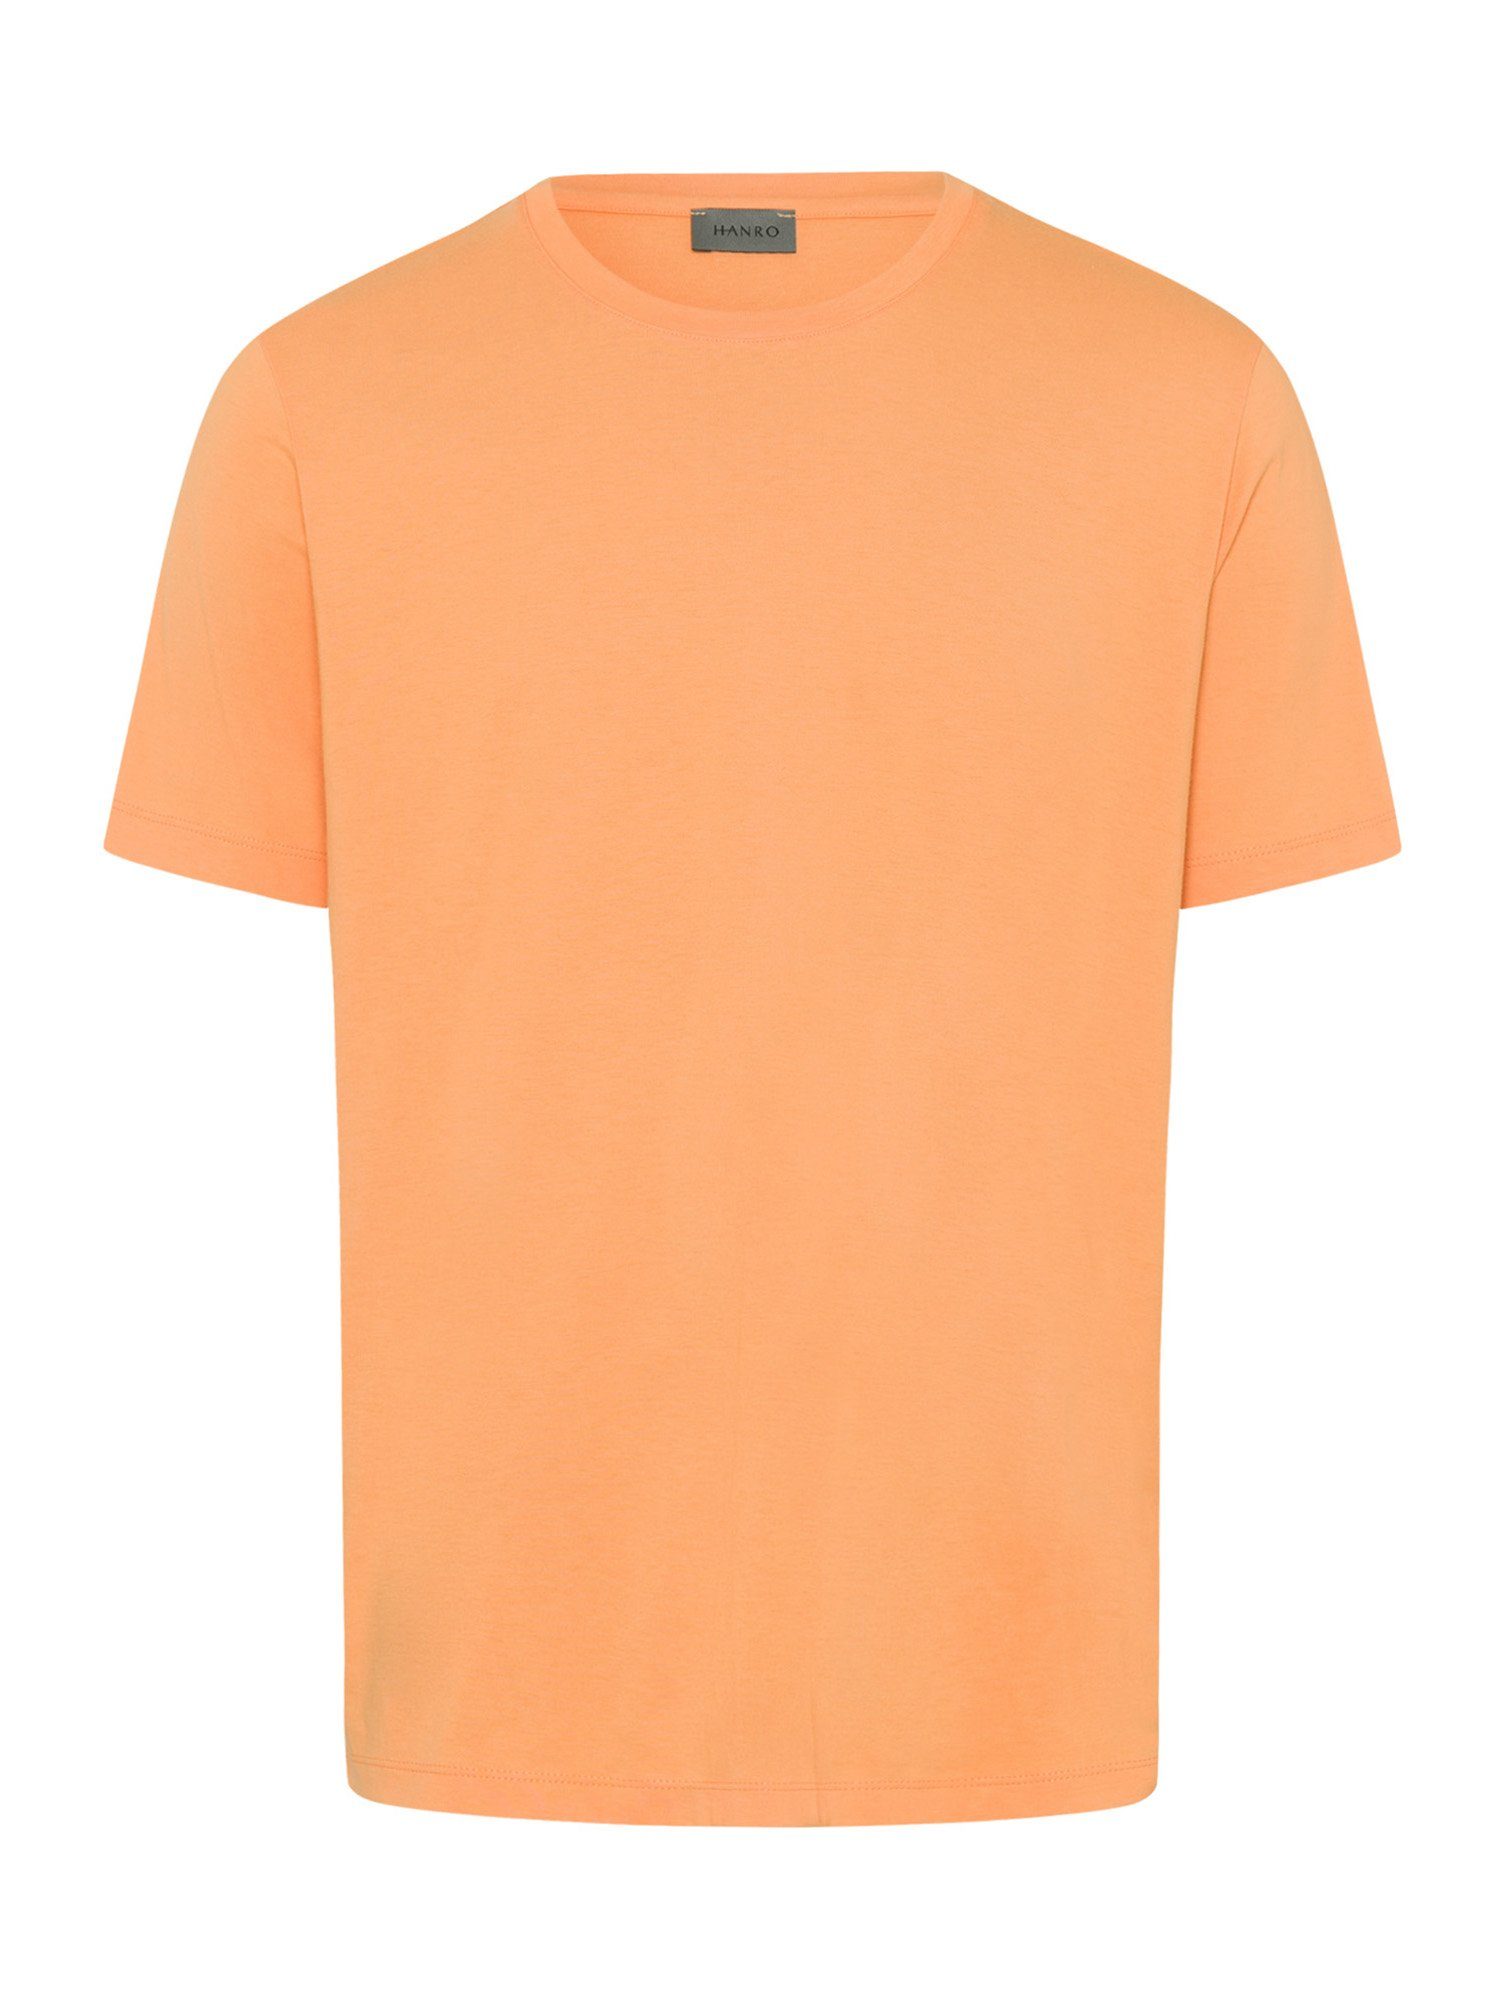 Hanro Shirts tangerine T-Shirt Living